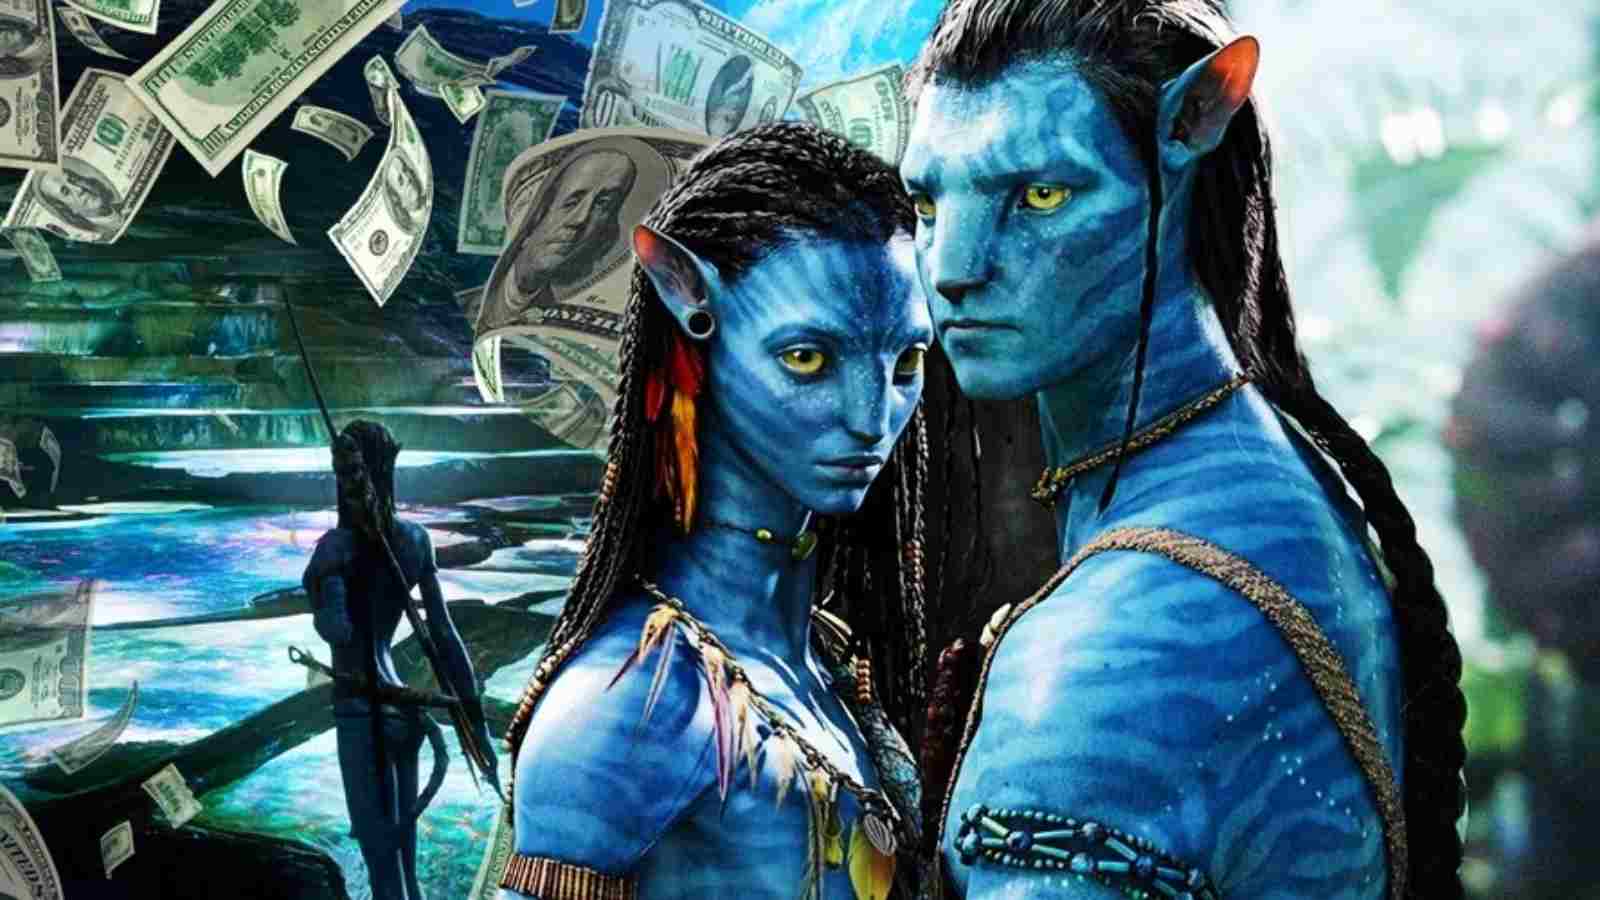 Avatar 2's Box Office Prospects